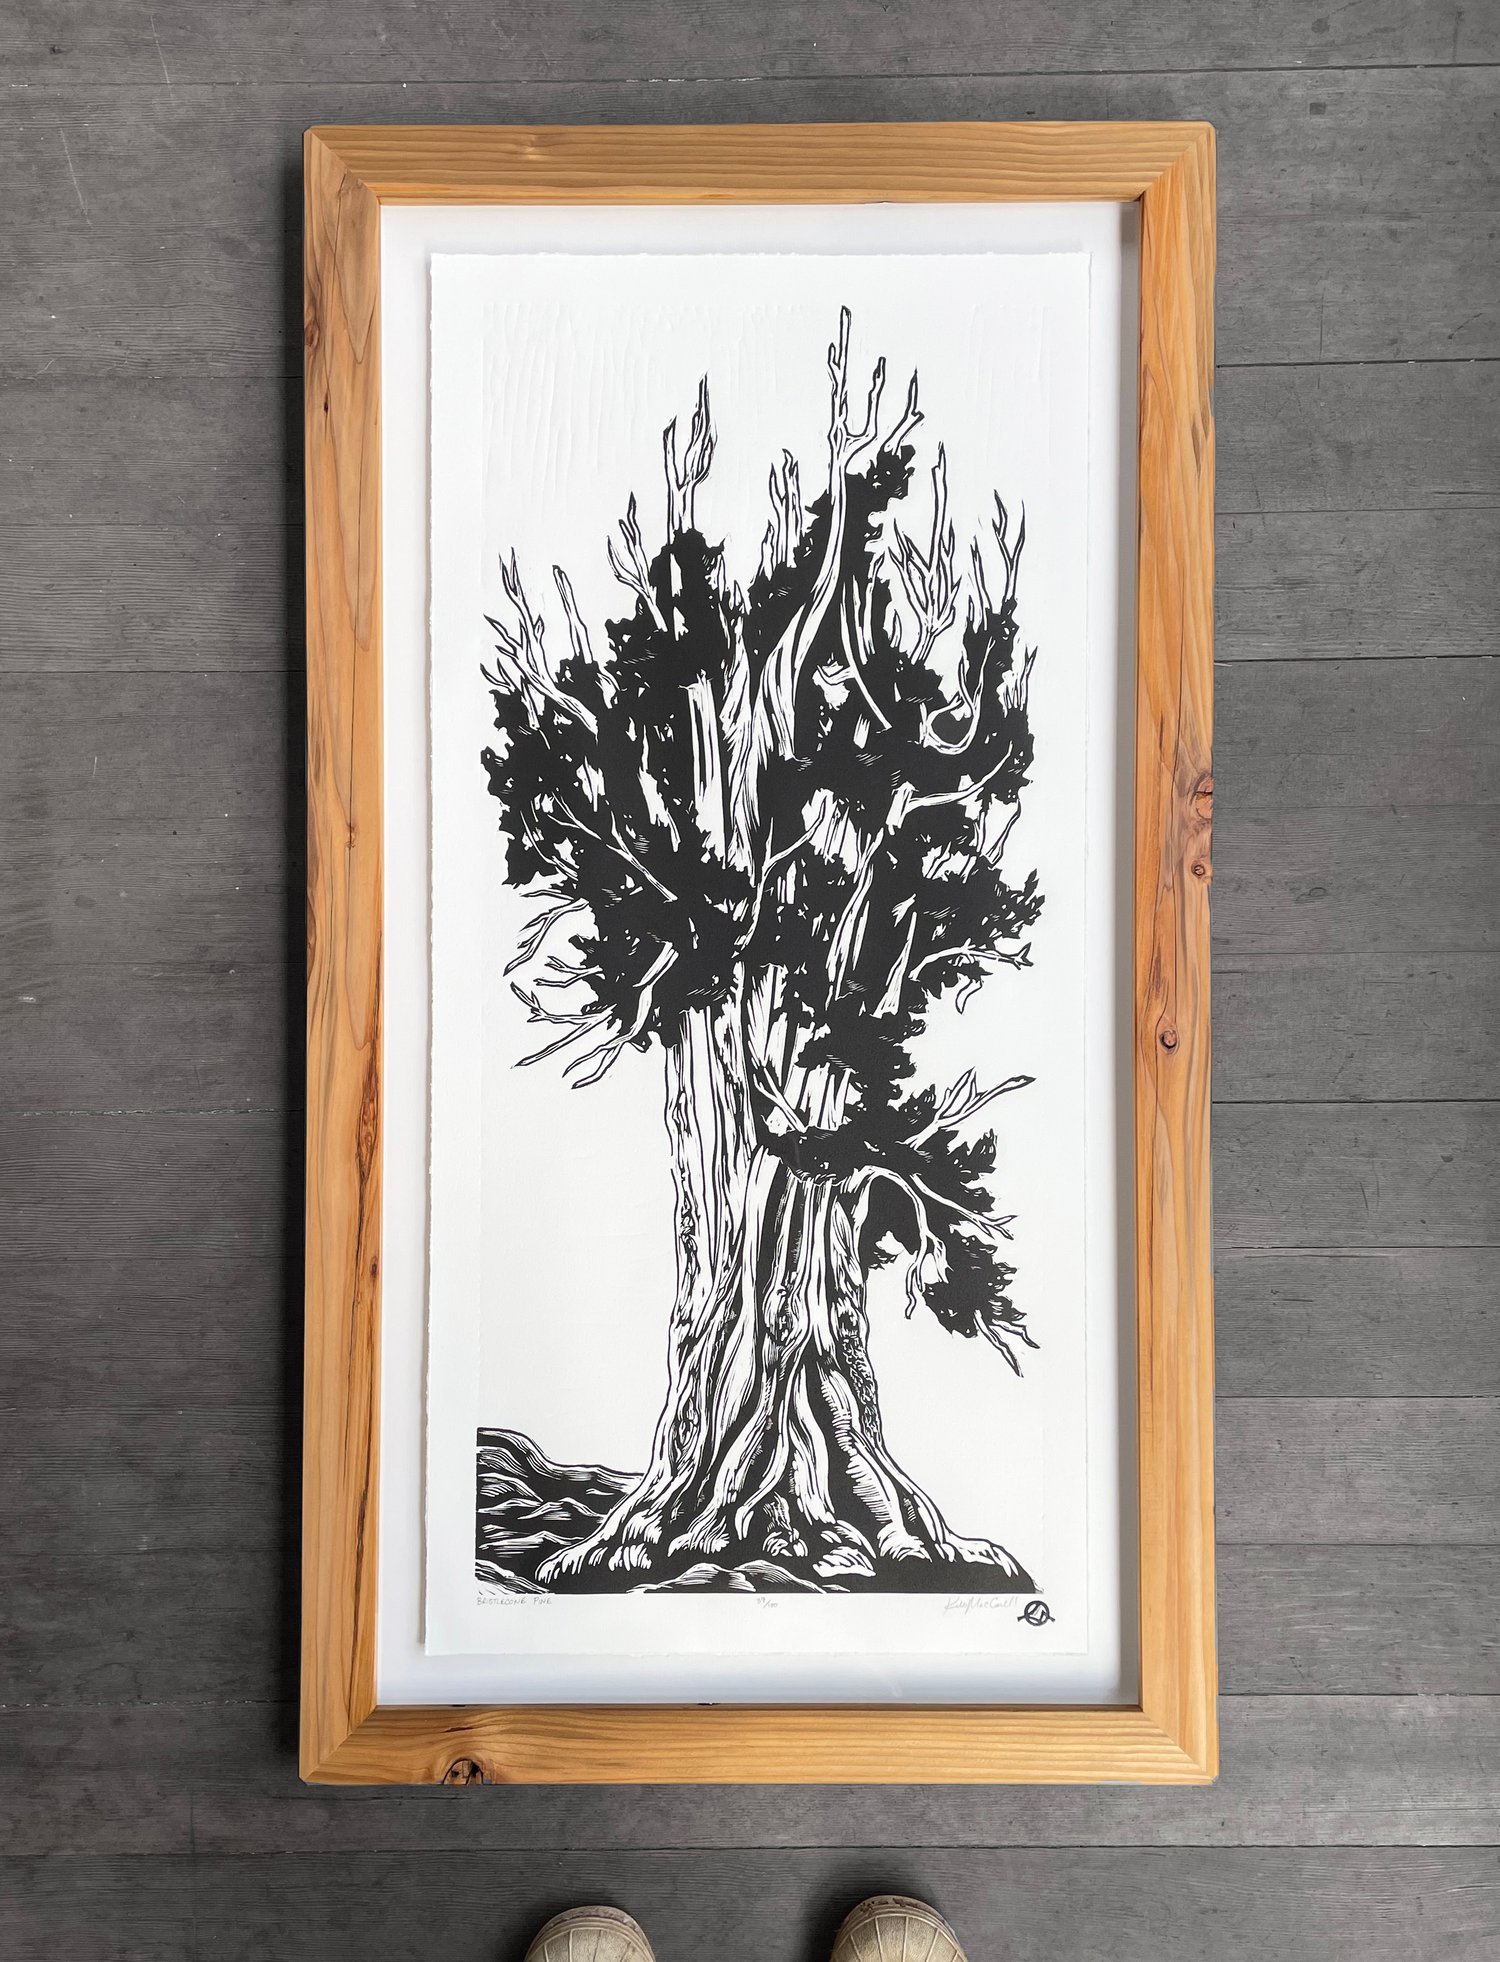 Bristlecone Pine Framed in Salvaged Lumber